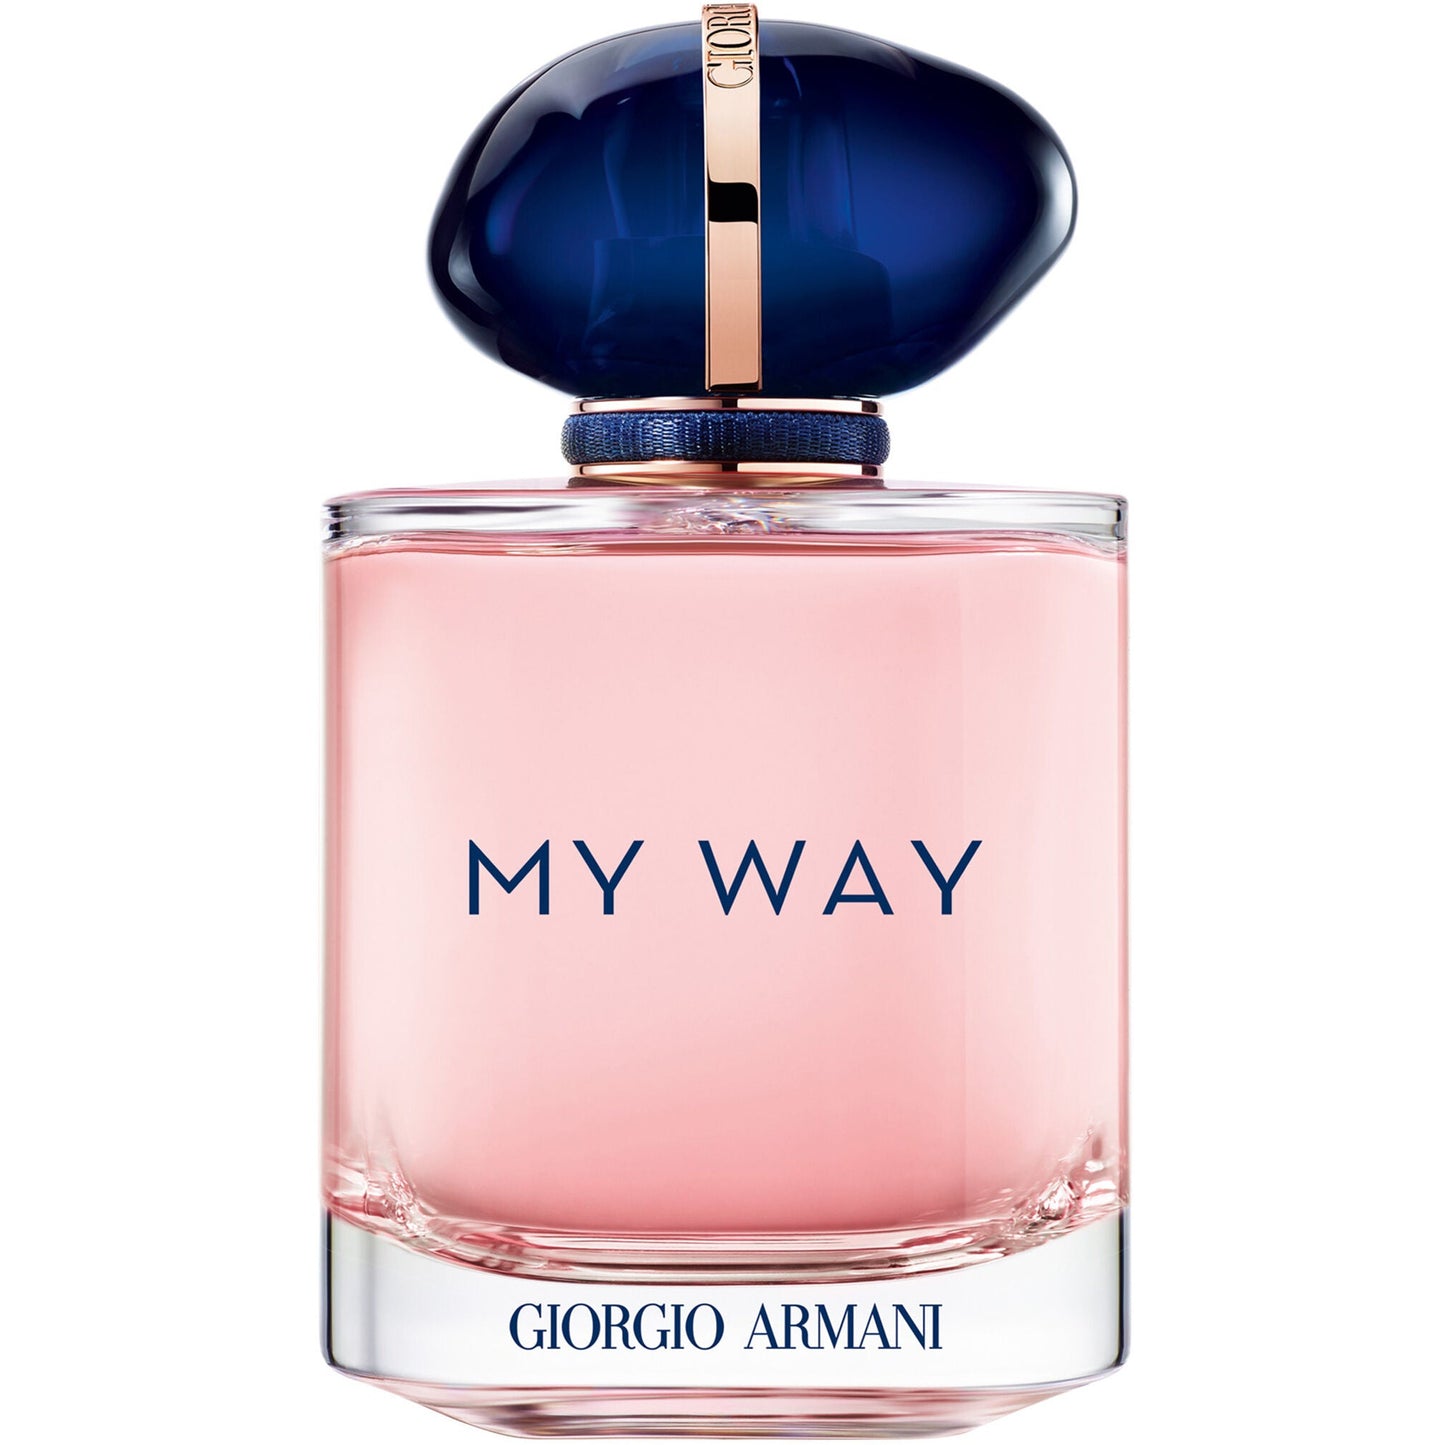 Giorgio Armani My Way Perfume Para Mujer 100 ml Eau de Parfum